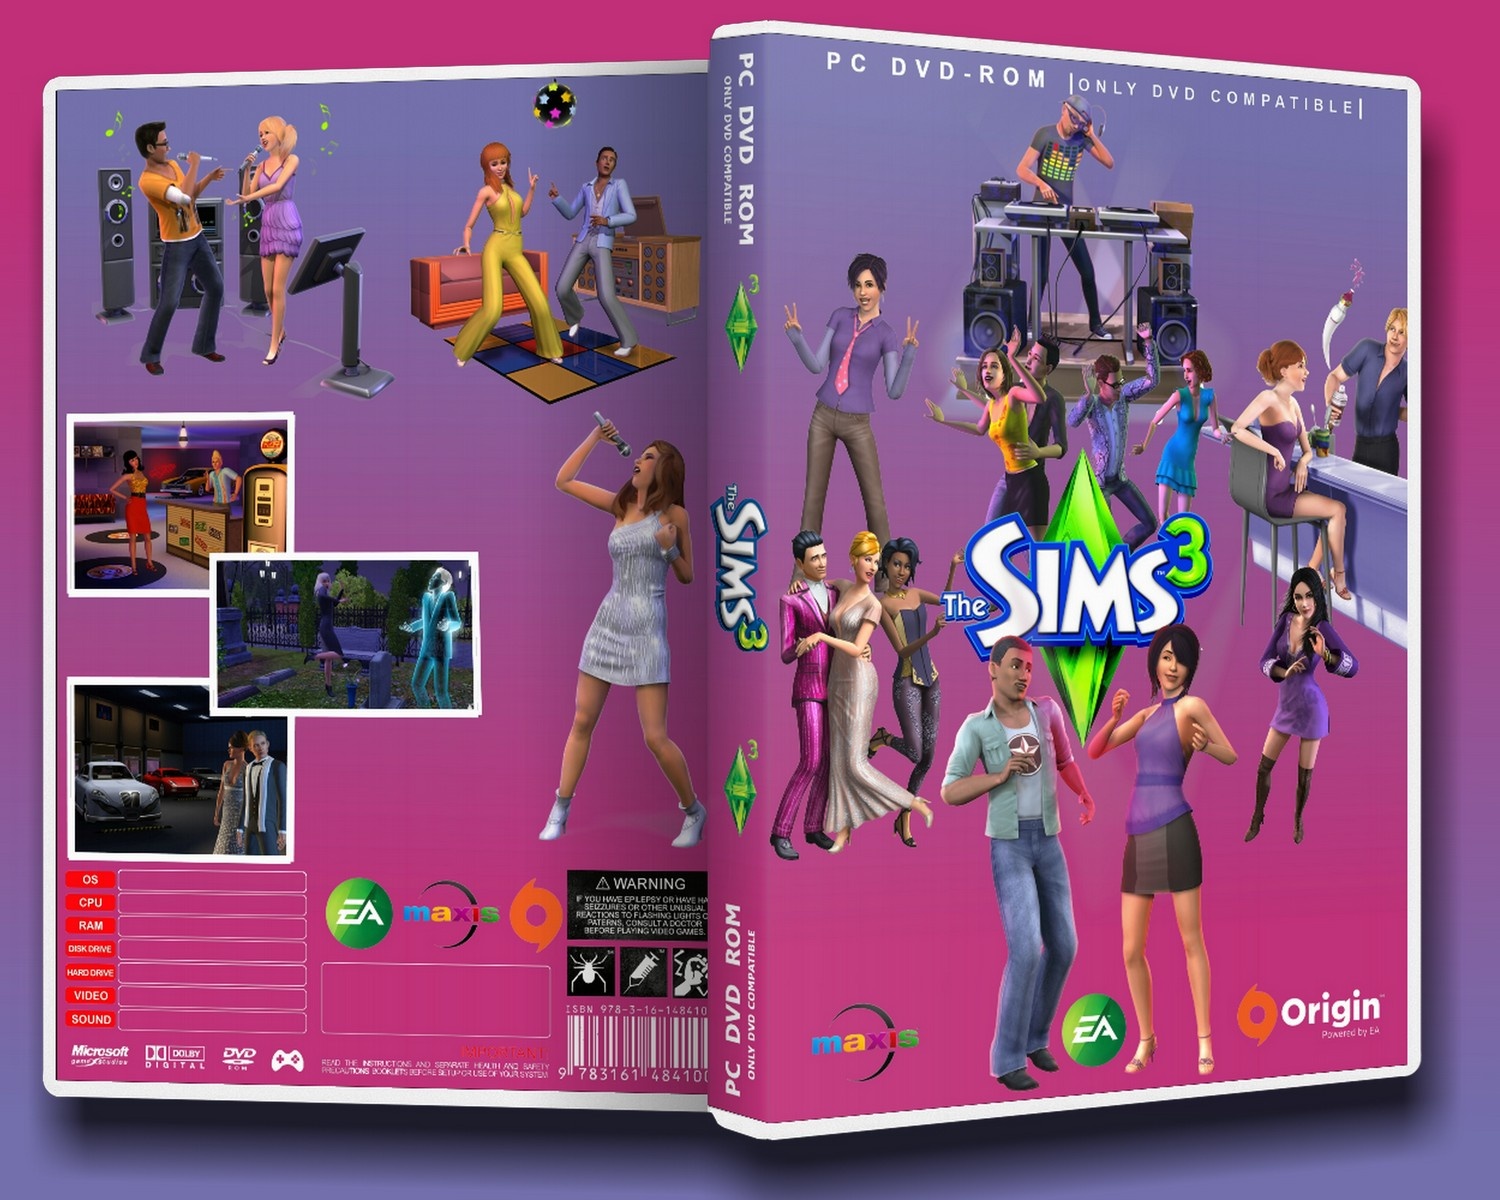 Sims 3 box cover